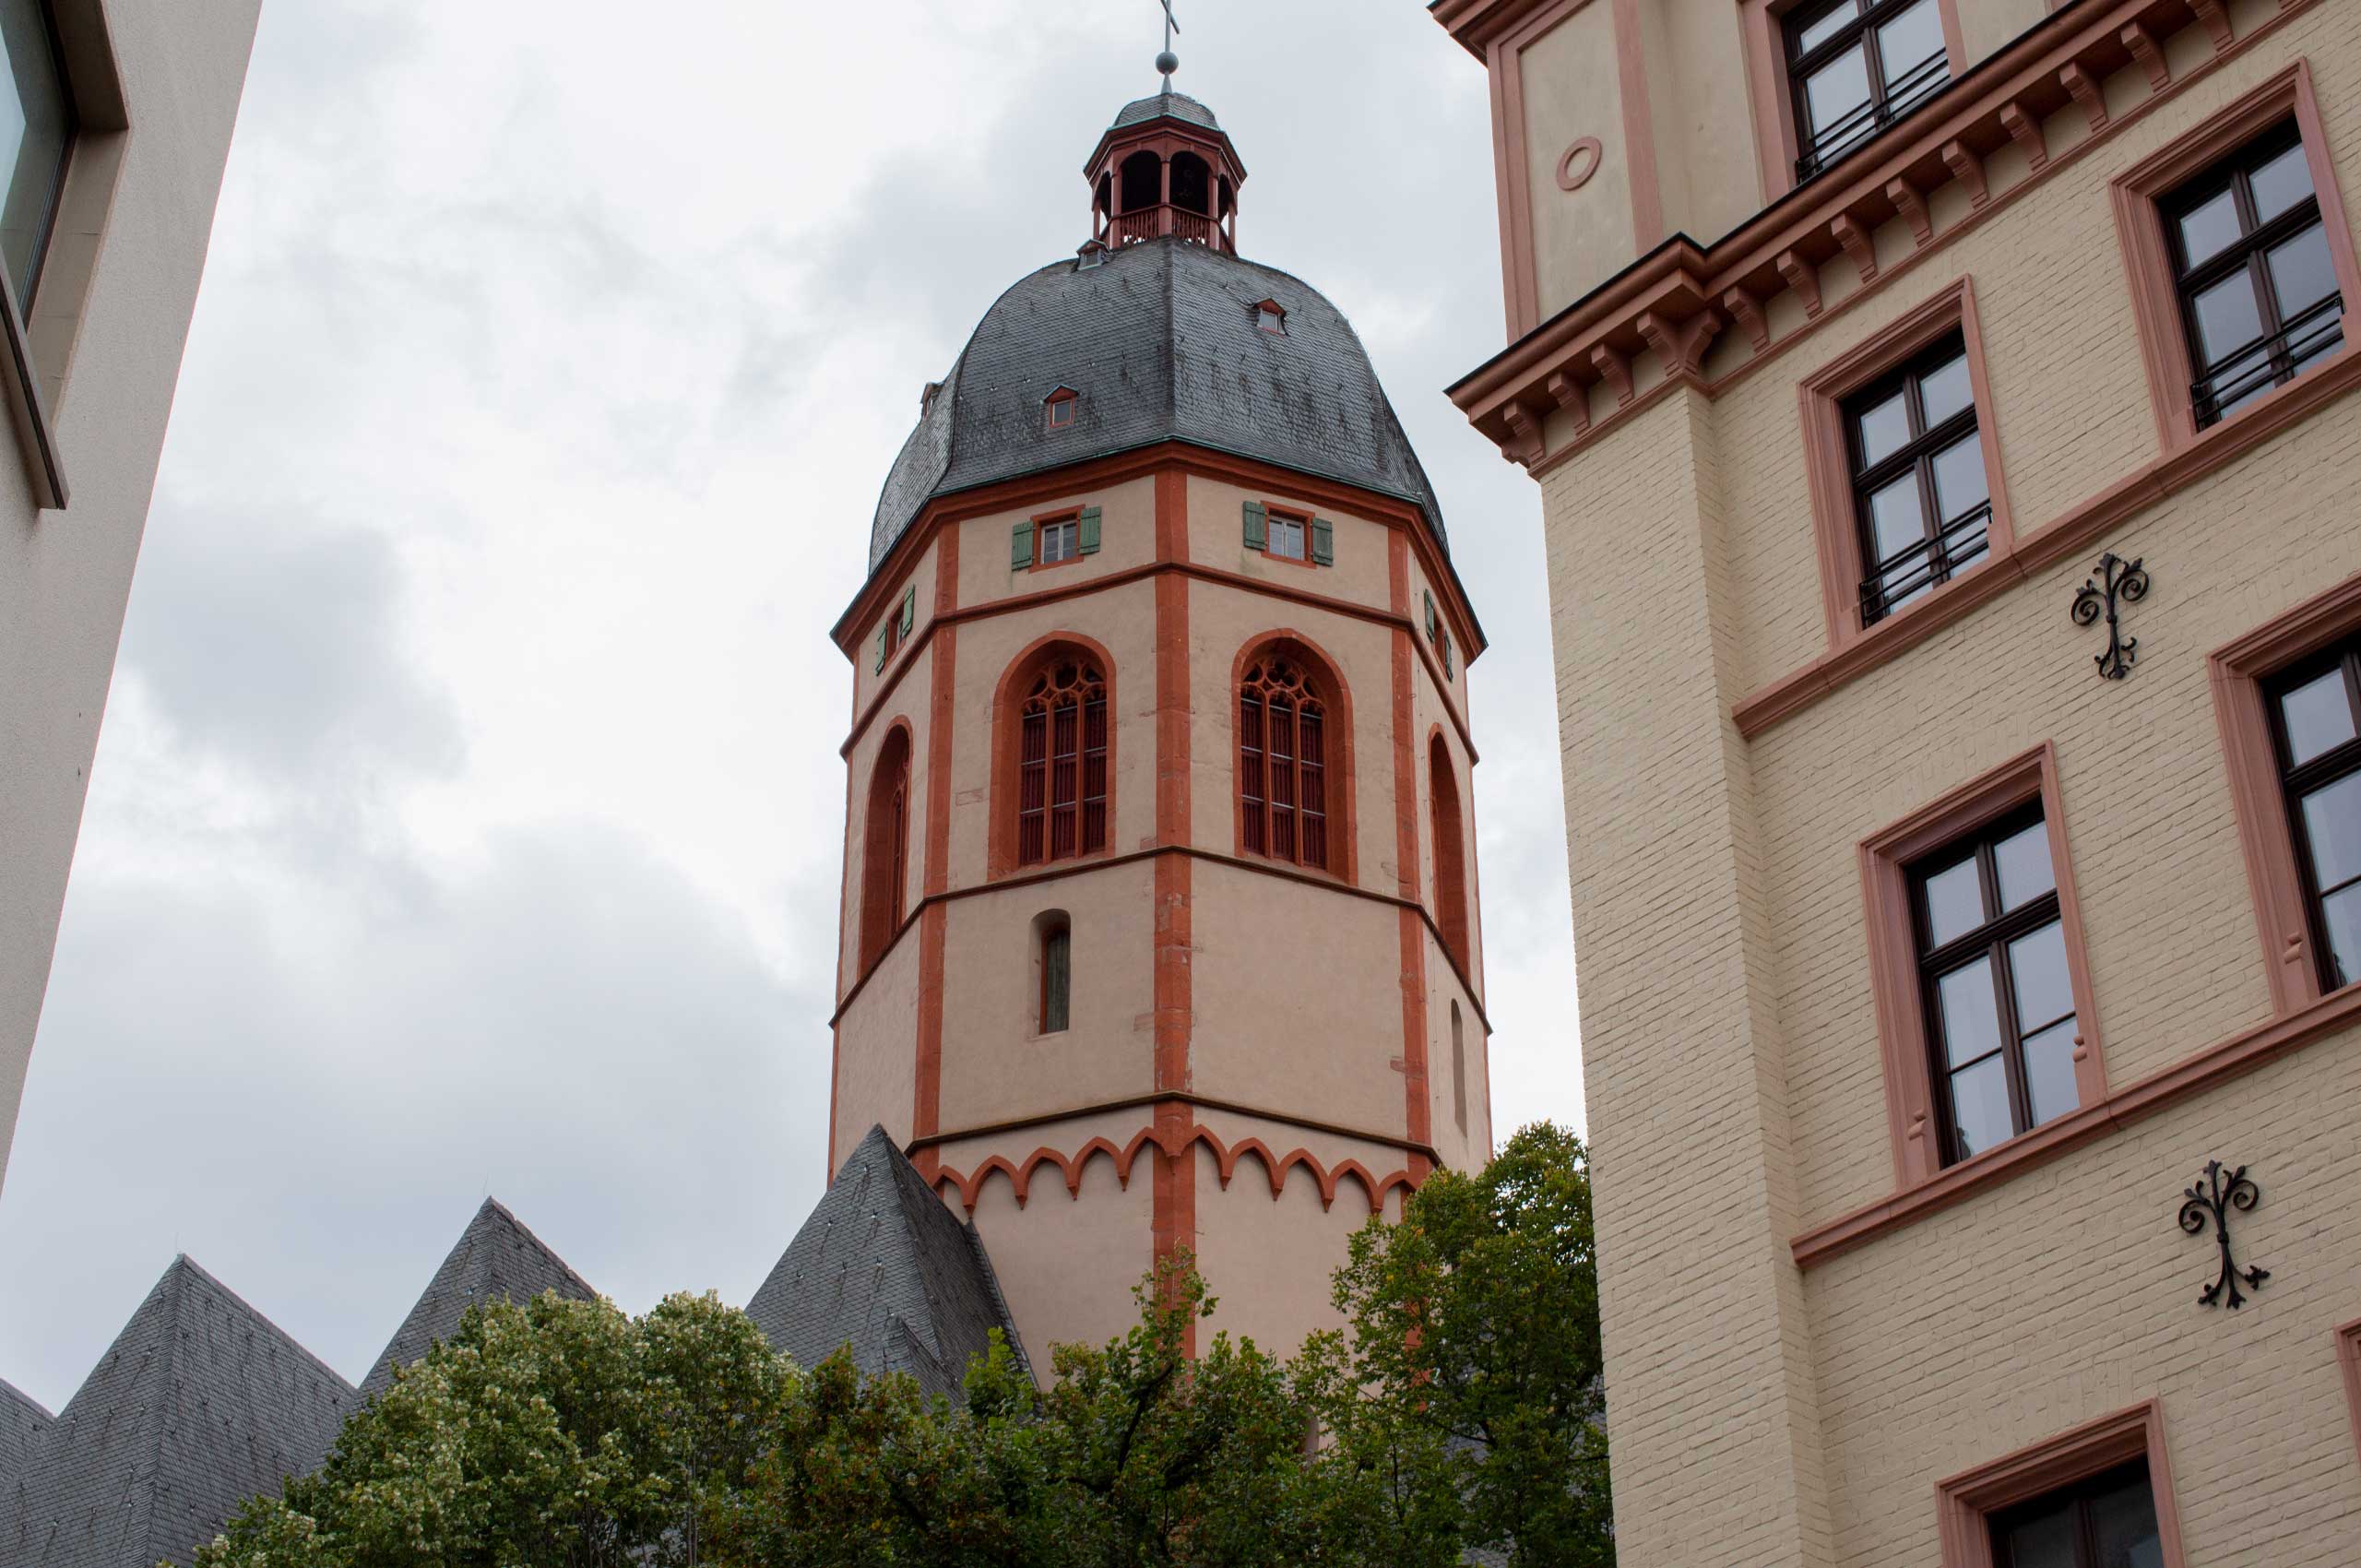 Turm St. Stephan mit den Spitzen des Kirchenschiff-Daches.. Bild: cc Franziska Köppe | madiko